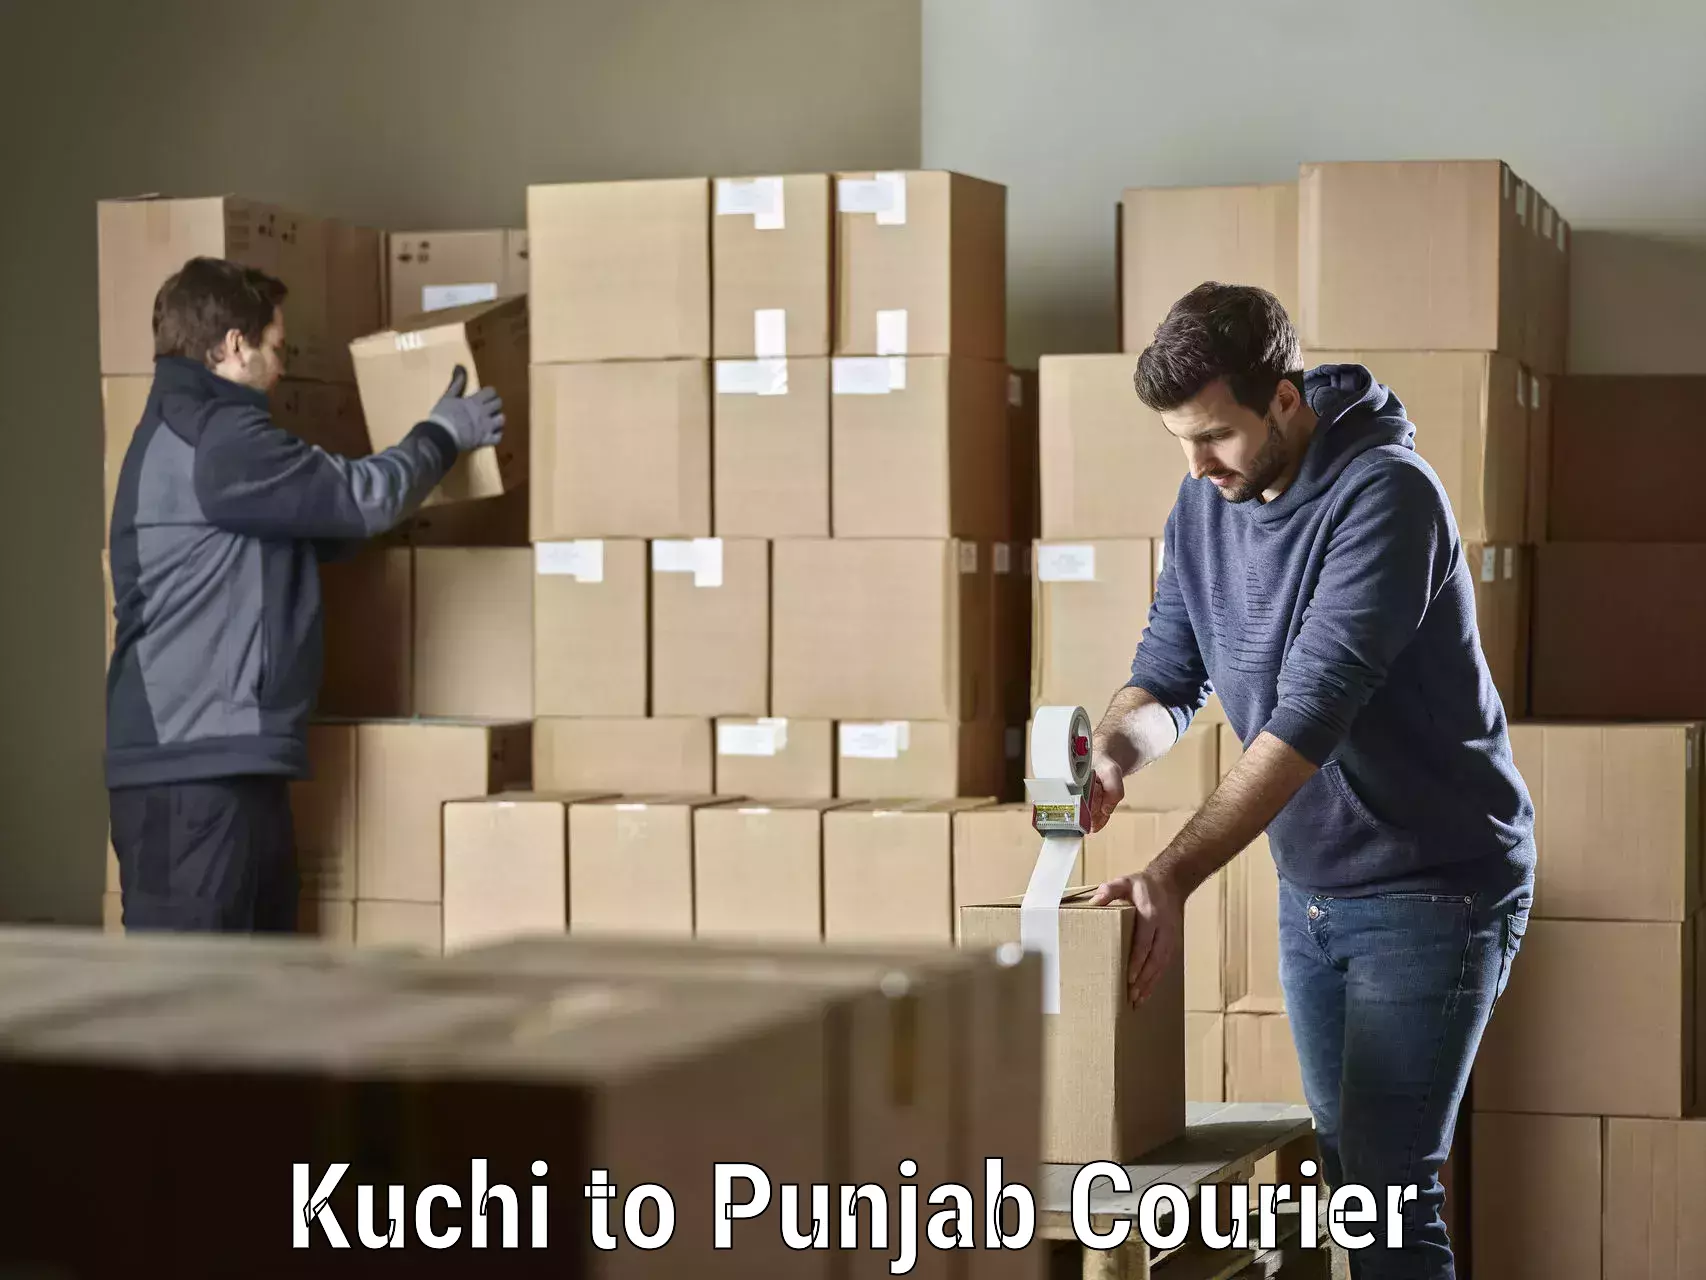 High-speed delivery Kuchi to Punjab